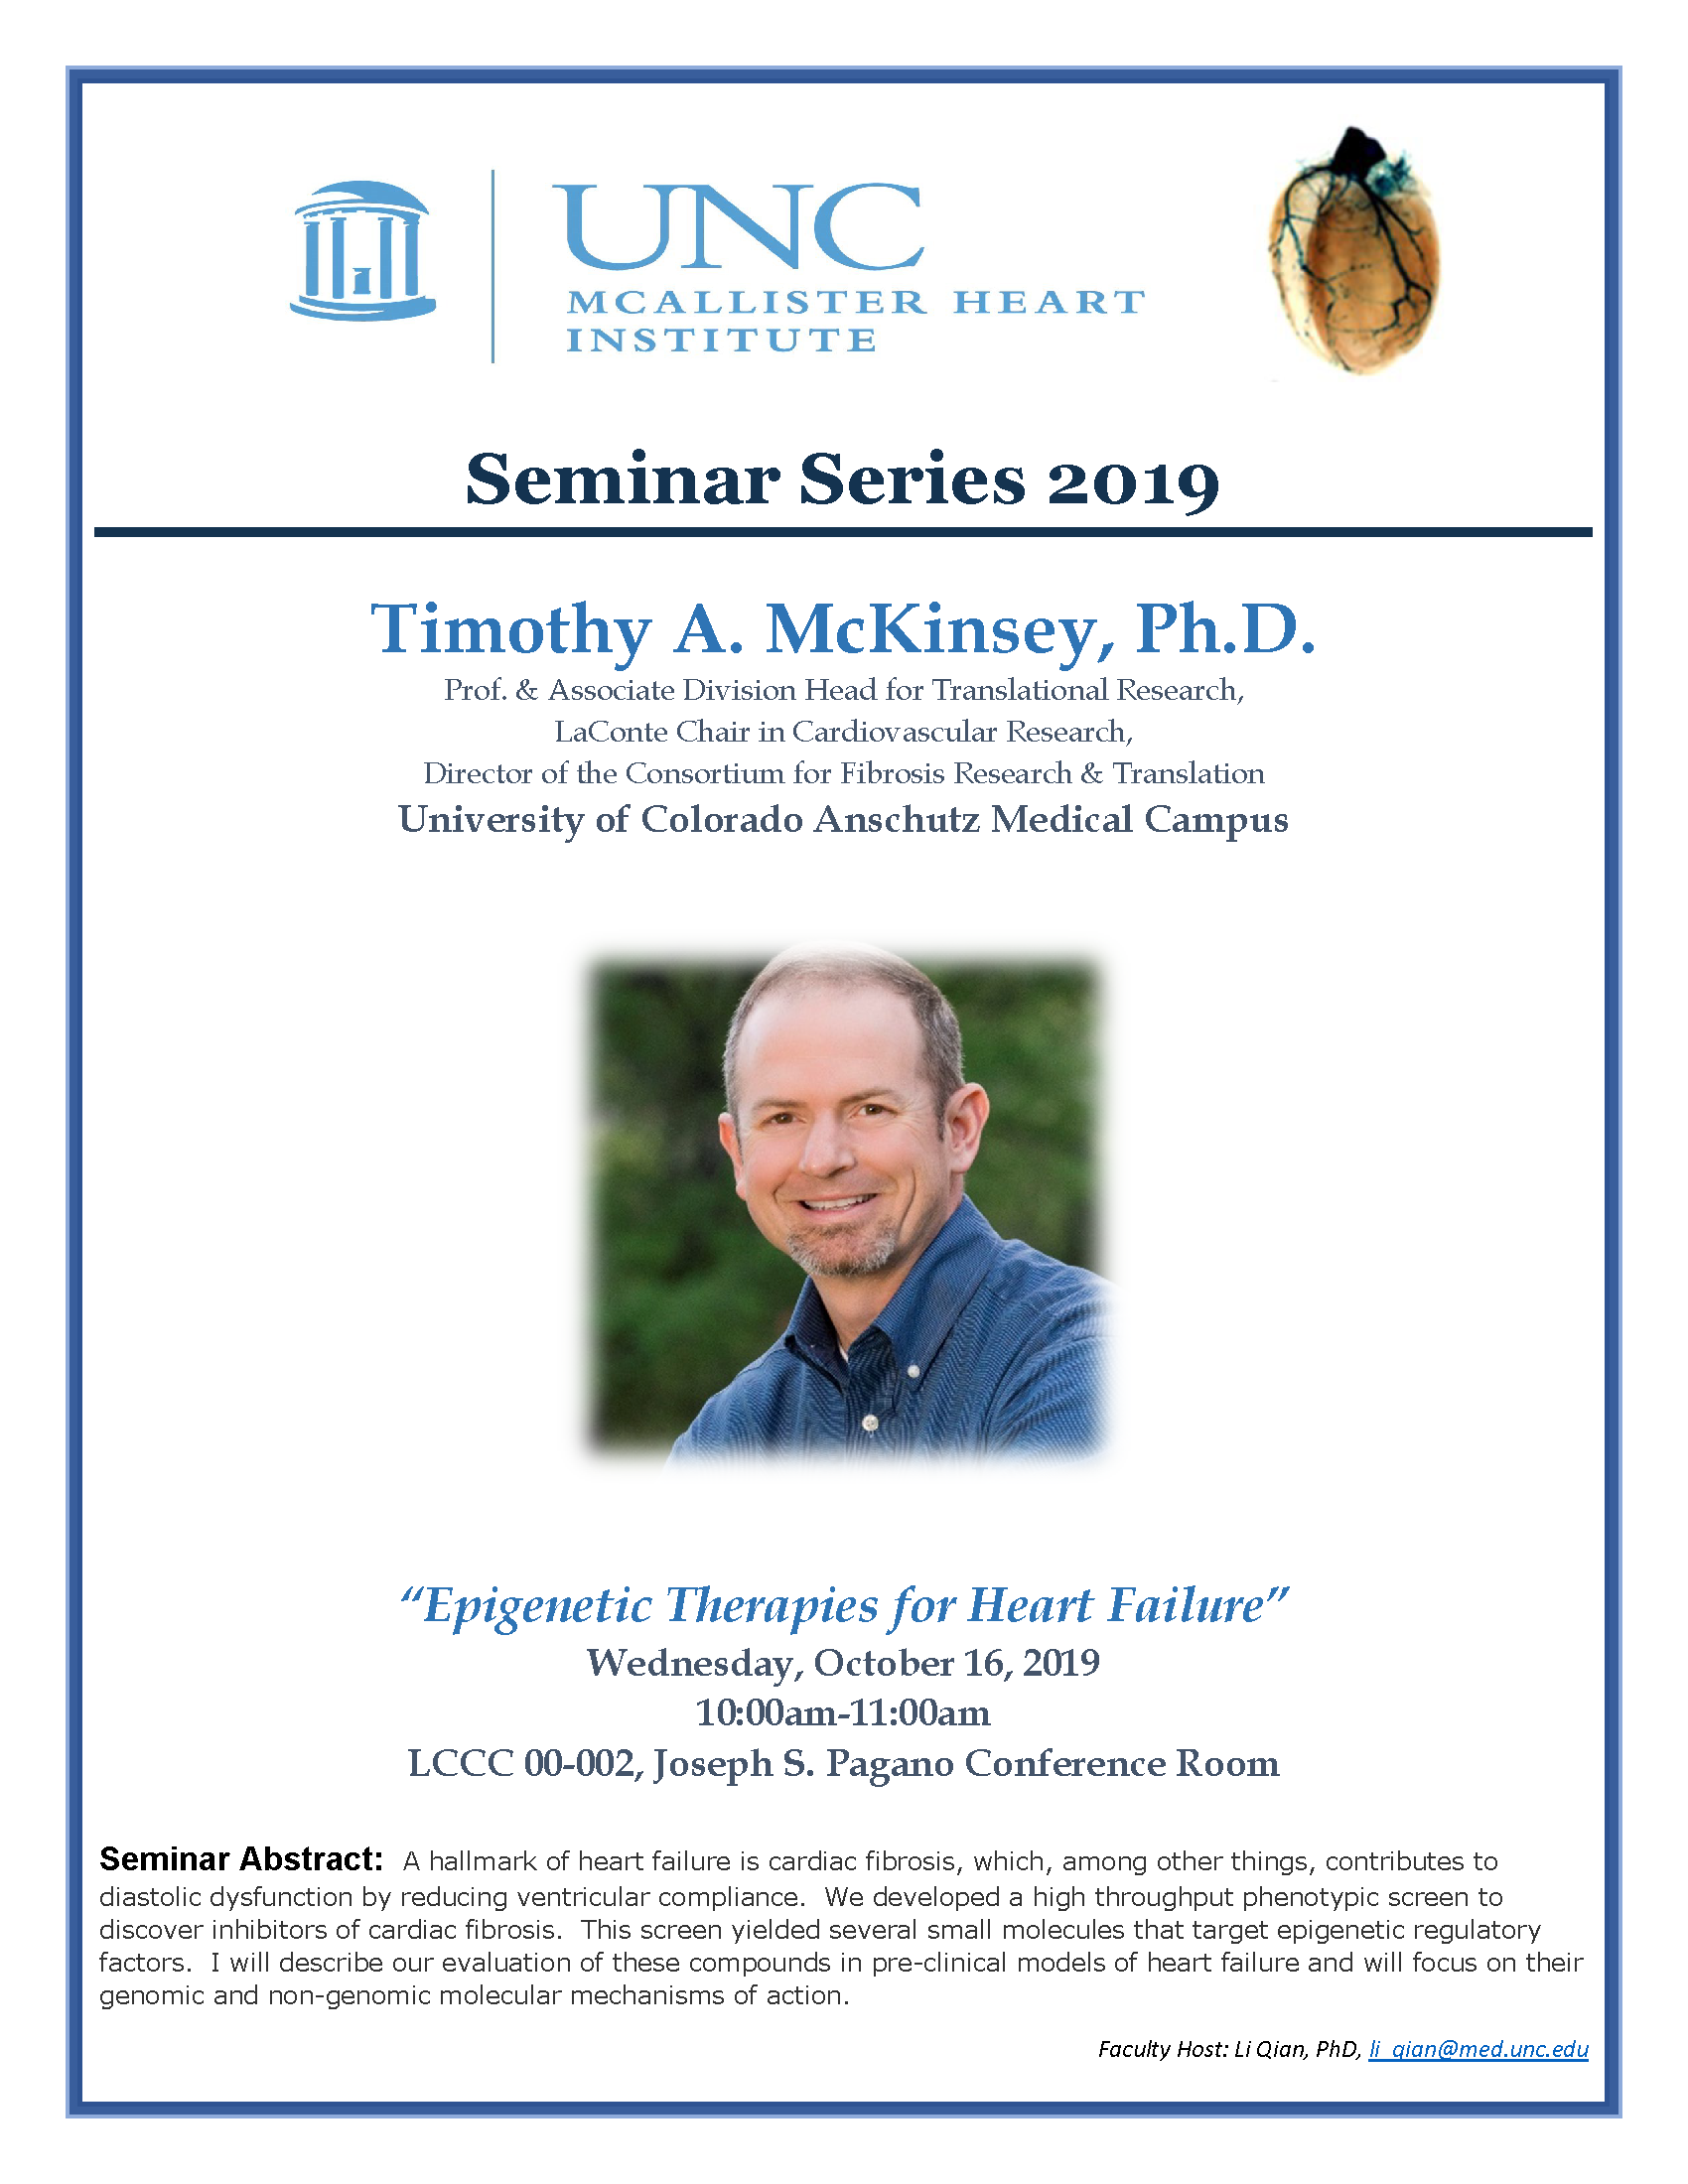 Timothy McKinsey, Ph.D. MHI Seminar Flyer